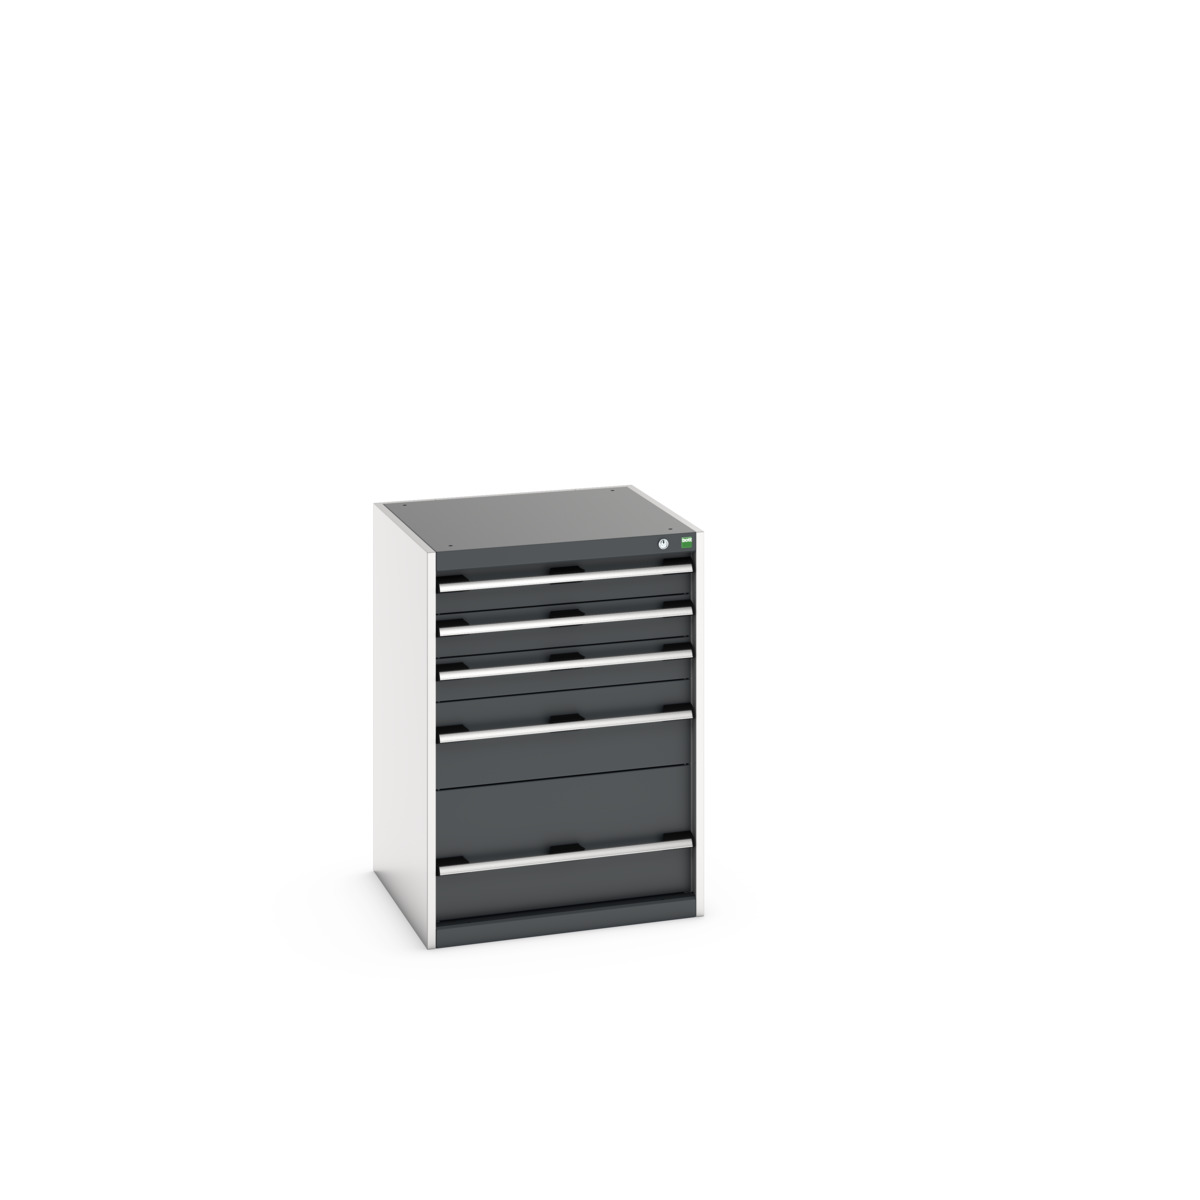 40019045. - cubio drawer cabinet